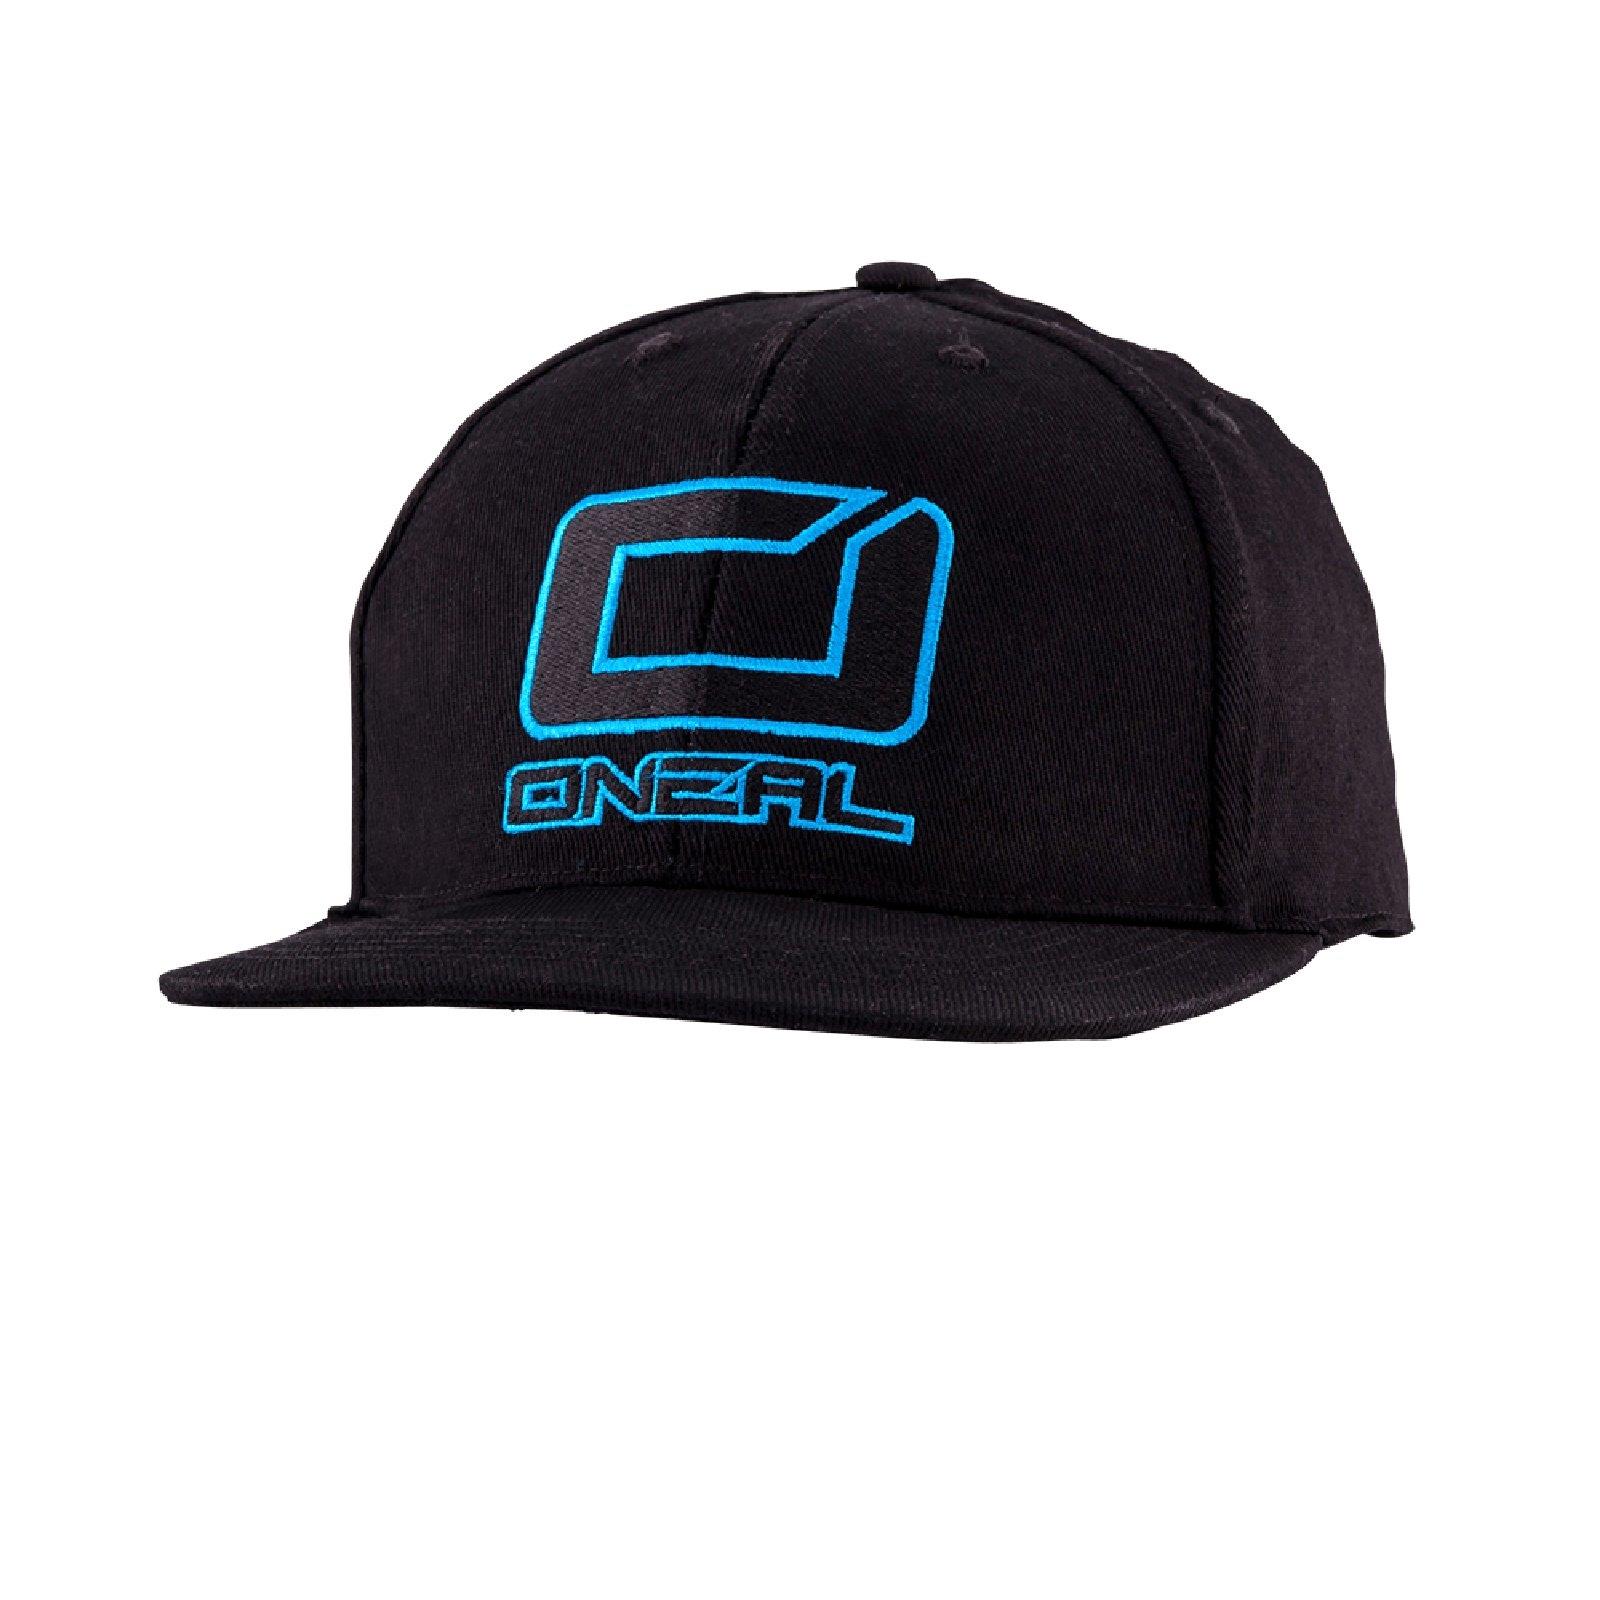 Oneal Snapback Cap Base Cap Kappe Mesh Logo Moto Cross Trucker Basecap Mütze NEU 